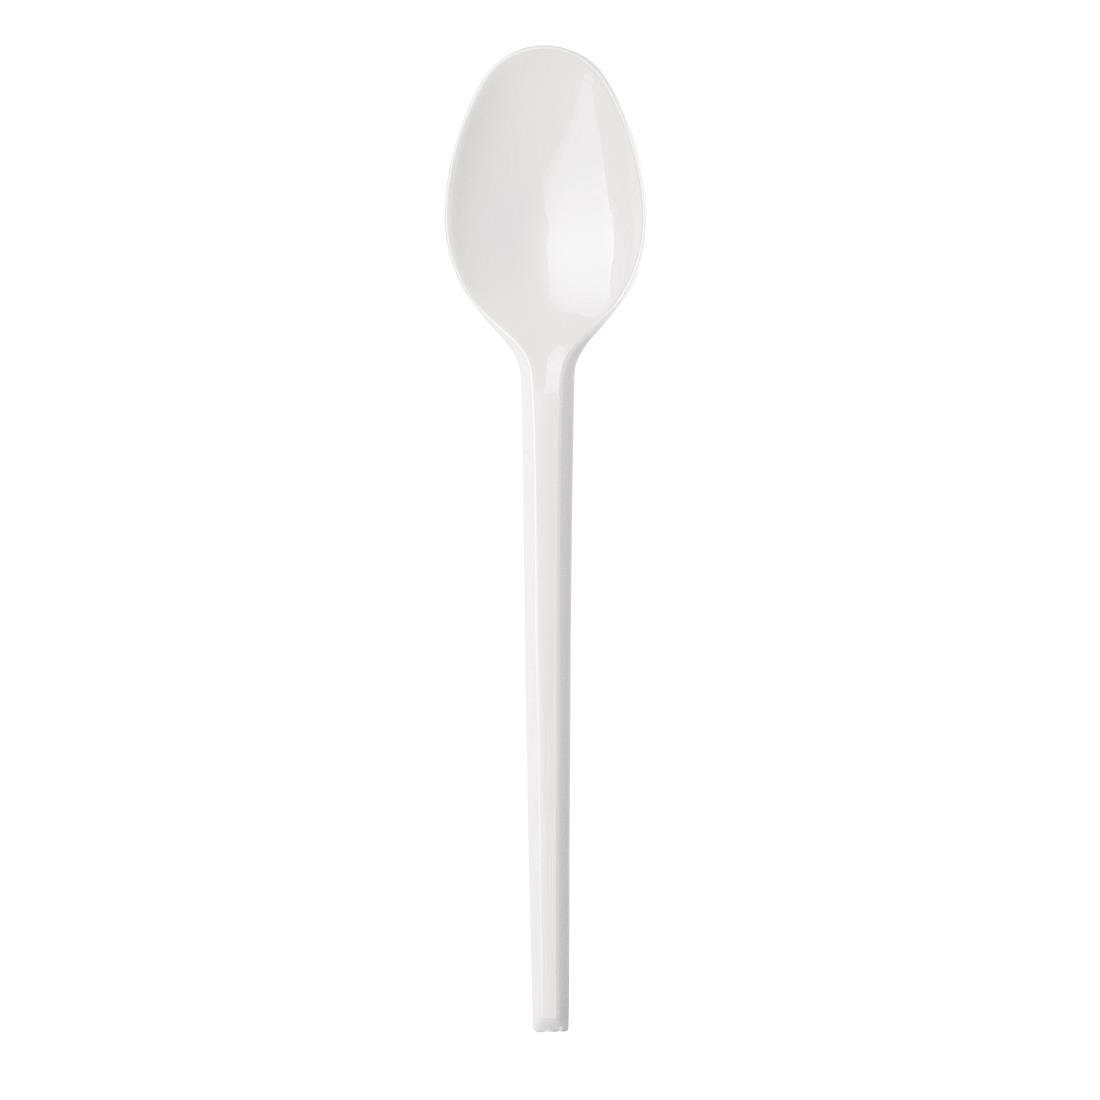 Fiesta Recyclable Lightweight Plastic Teaspoons White (Pack of 100) - U643  - 1